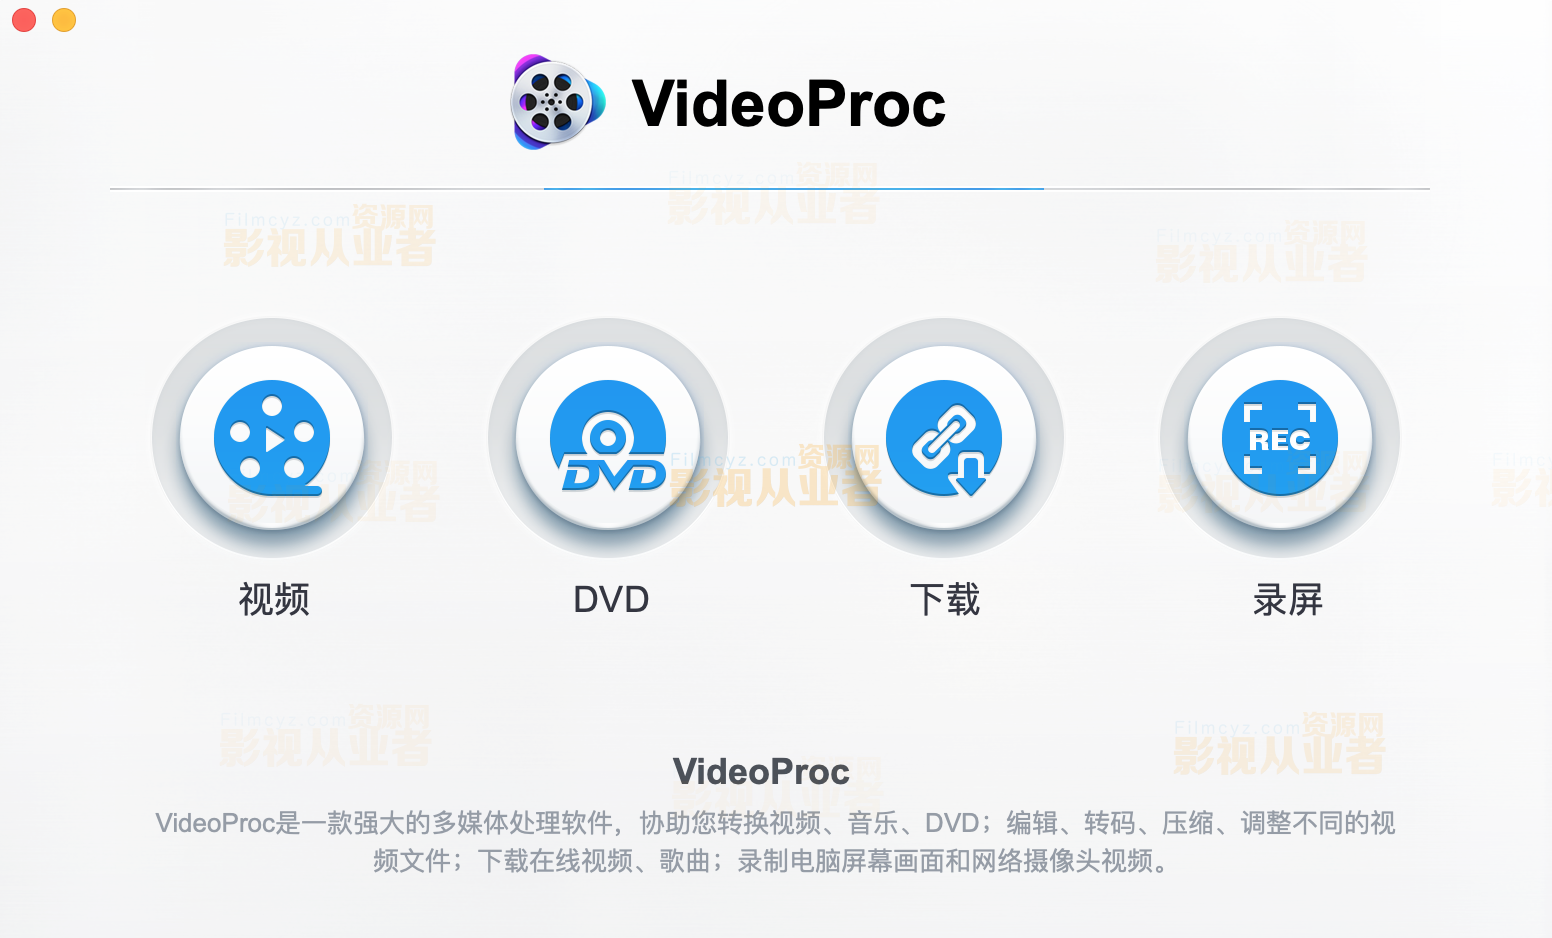 videoproc 3.6 torrent